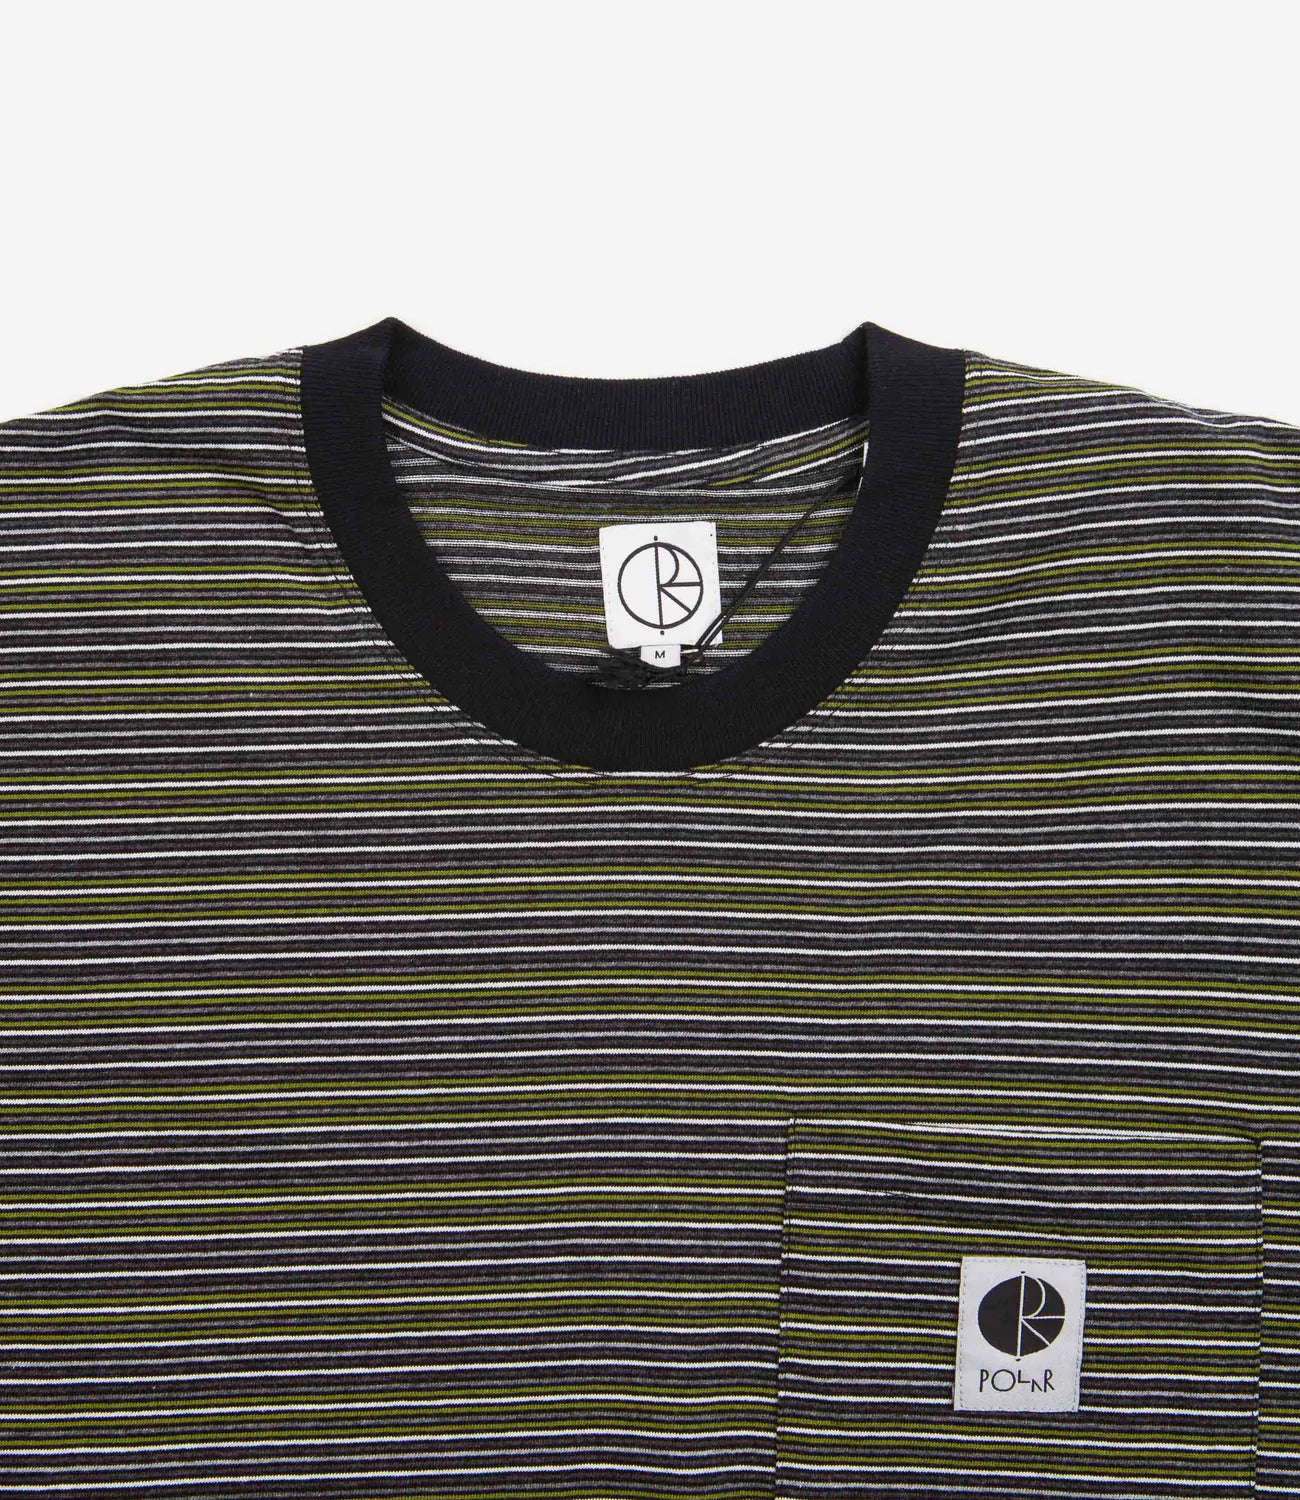 Polar - Stripe Pocket T-Shirt - Black/Green